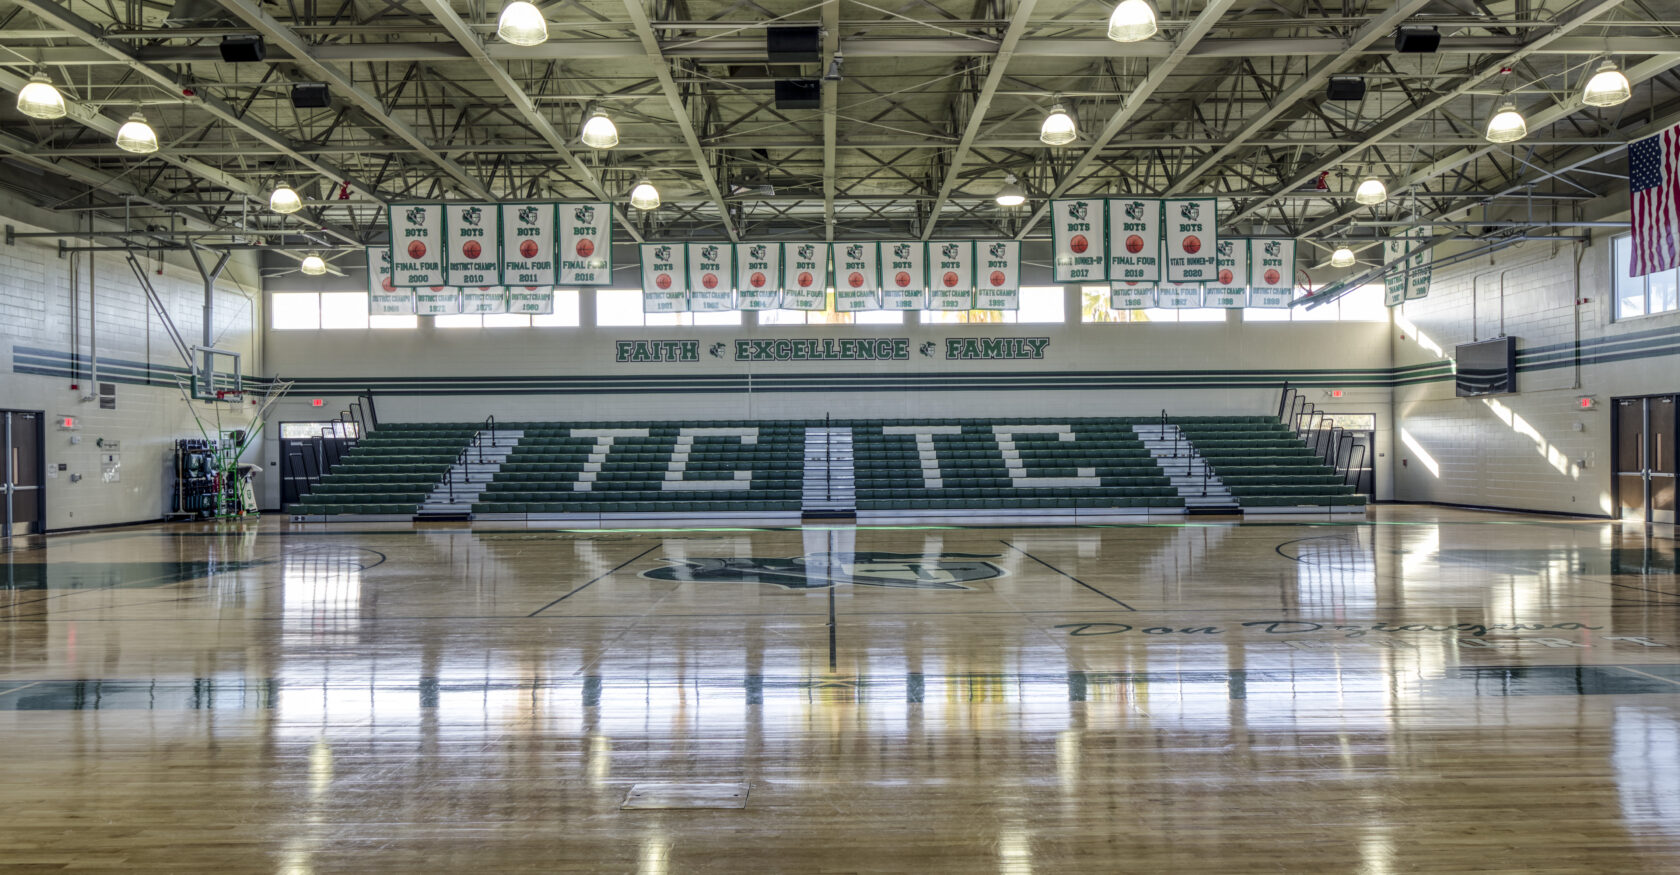 Interior shot of Tampa Catholic basketball court